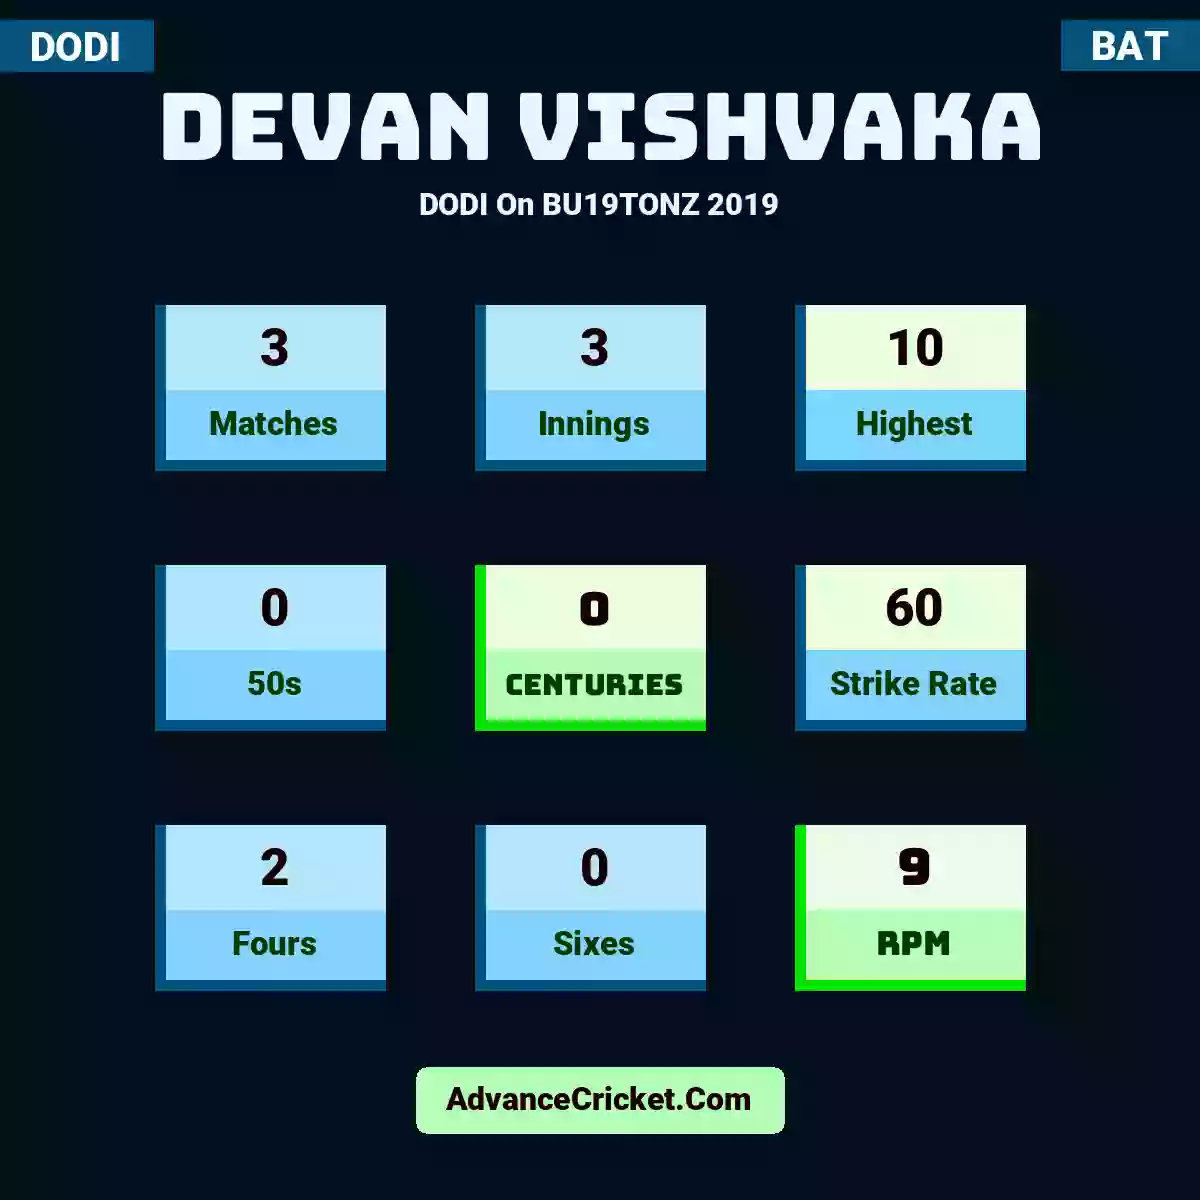 Devan Vishvaka DODI  On BU19TONZ 2019, Devan Vishvaka played 3 matches, scored 10 runs as highest, 0 half-centuries, and 0 centuries, with a strike rate of 60. D.Vishvaka hit 2 fours and 0 sixes, with an RPM of 9.